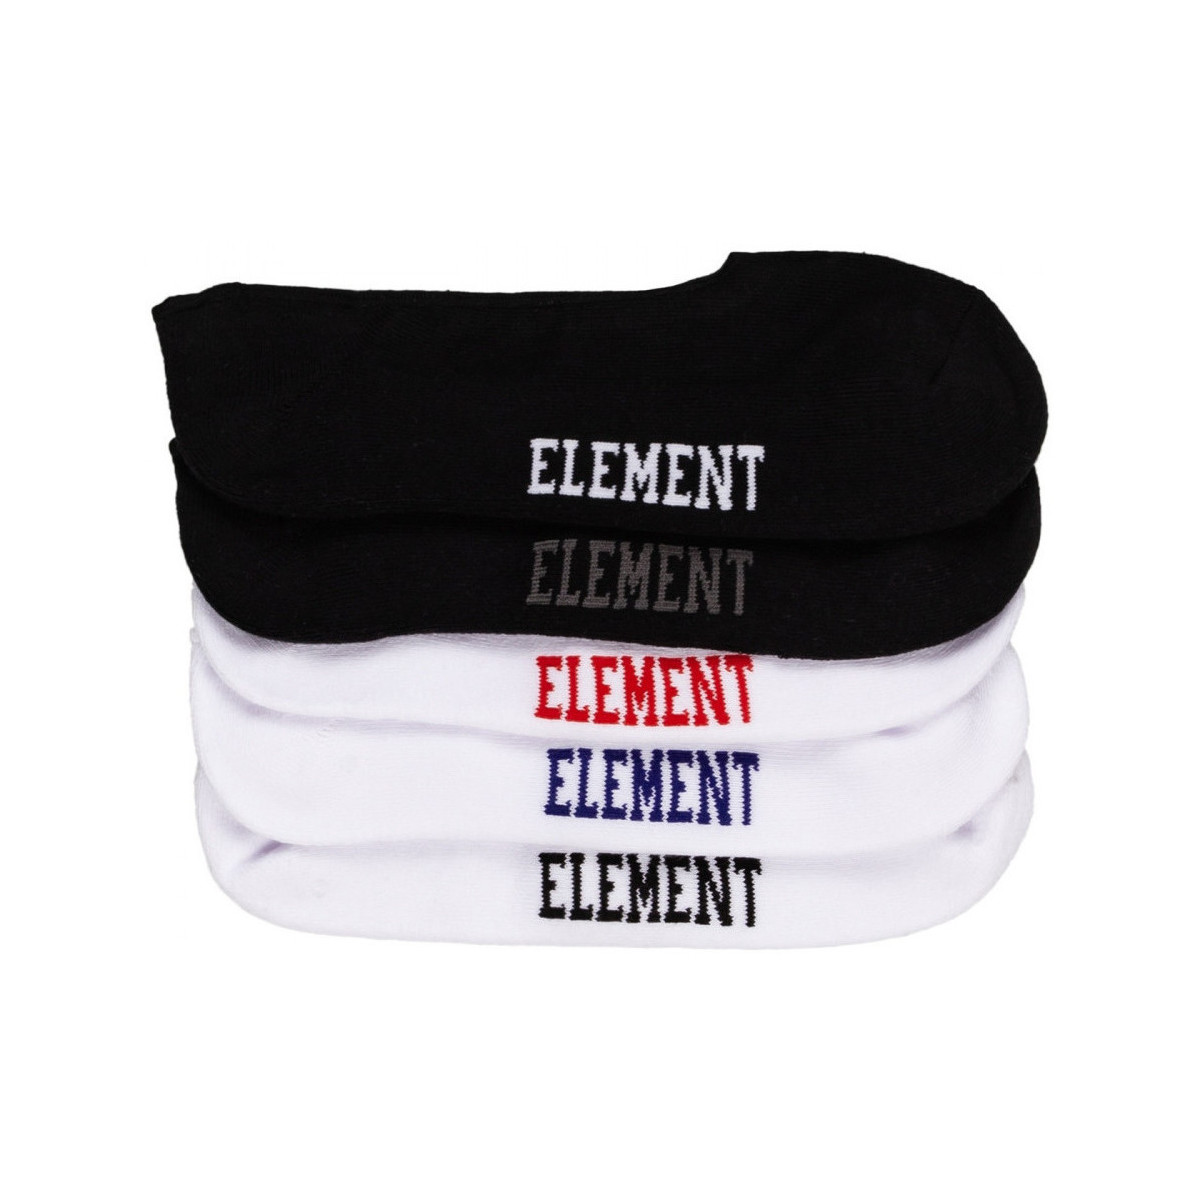 Element Multicolore Low-rise socks 5 p. 4PjNtxN0